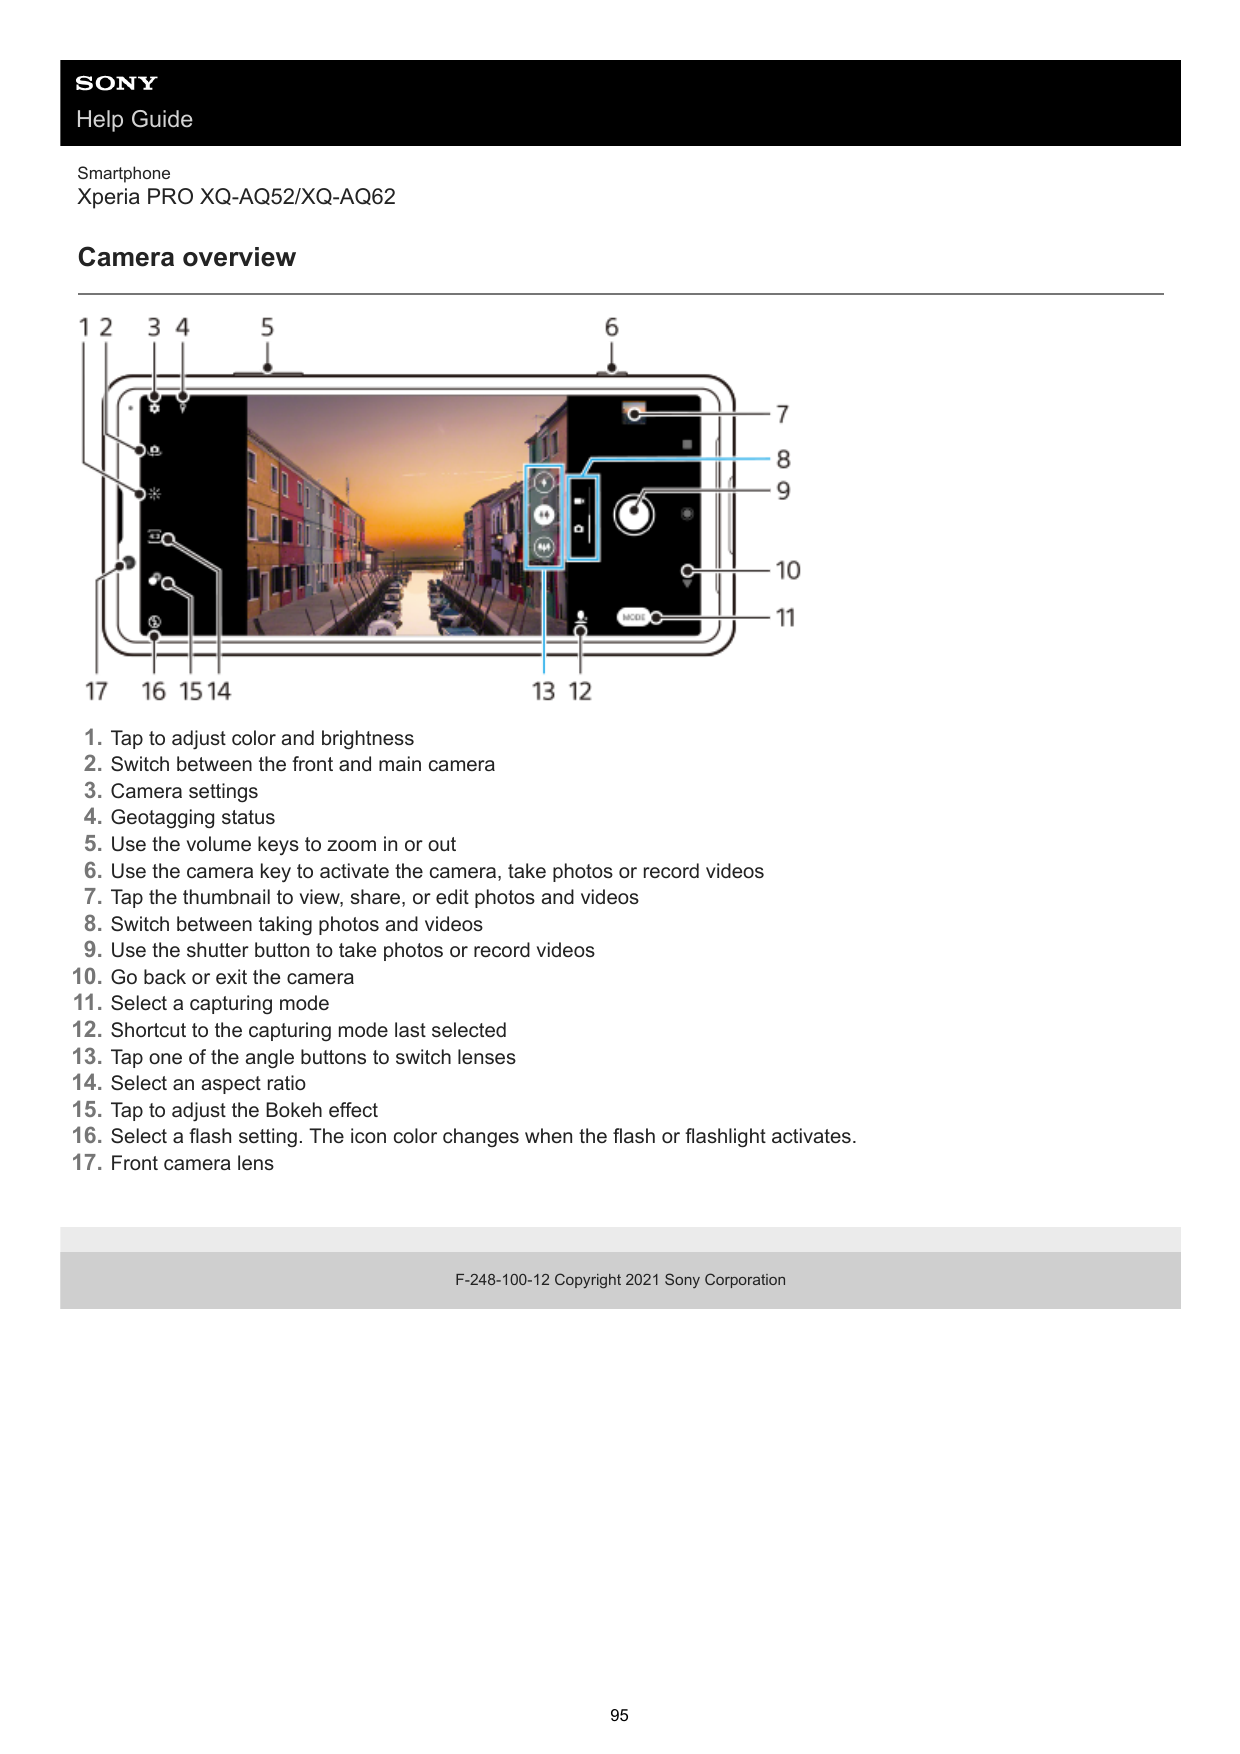 Help GuideSmartphoneXperia PRO XQ-AQ52/XQ-AQ62Camera overview1.2.3.4.5.6.7.8.9.10.11.12.13.14.15.16.17.Tap to adjust color and b